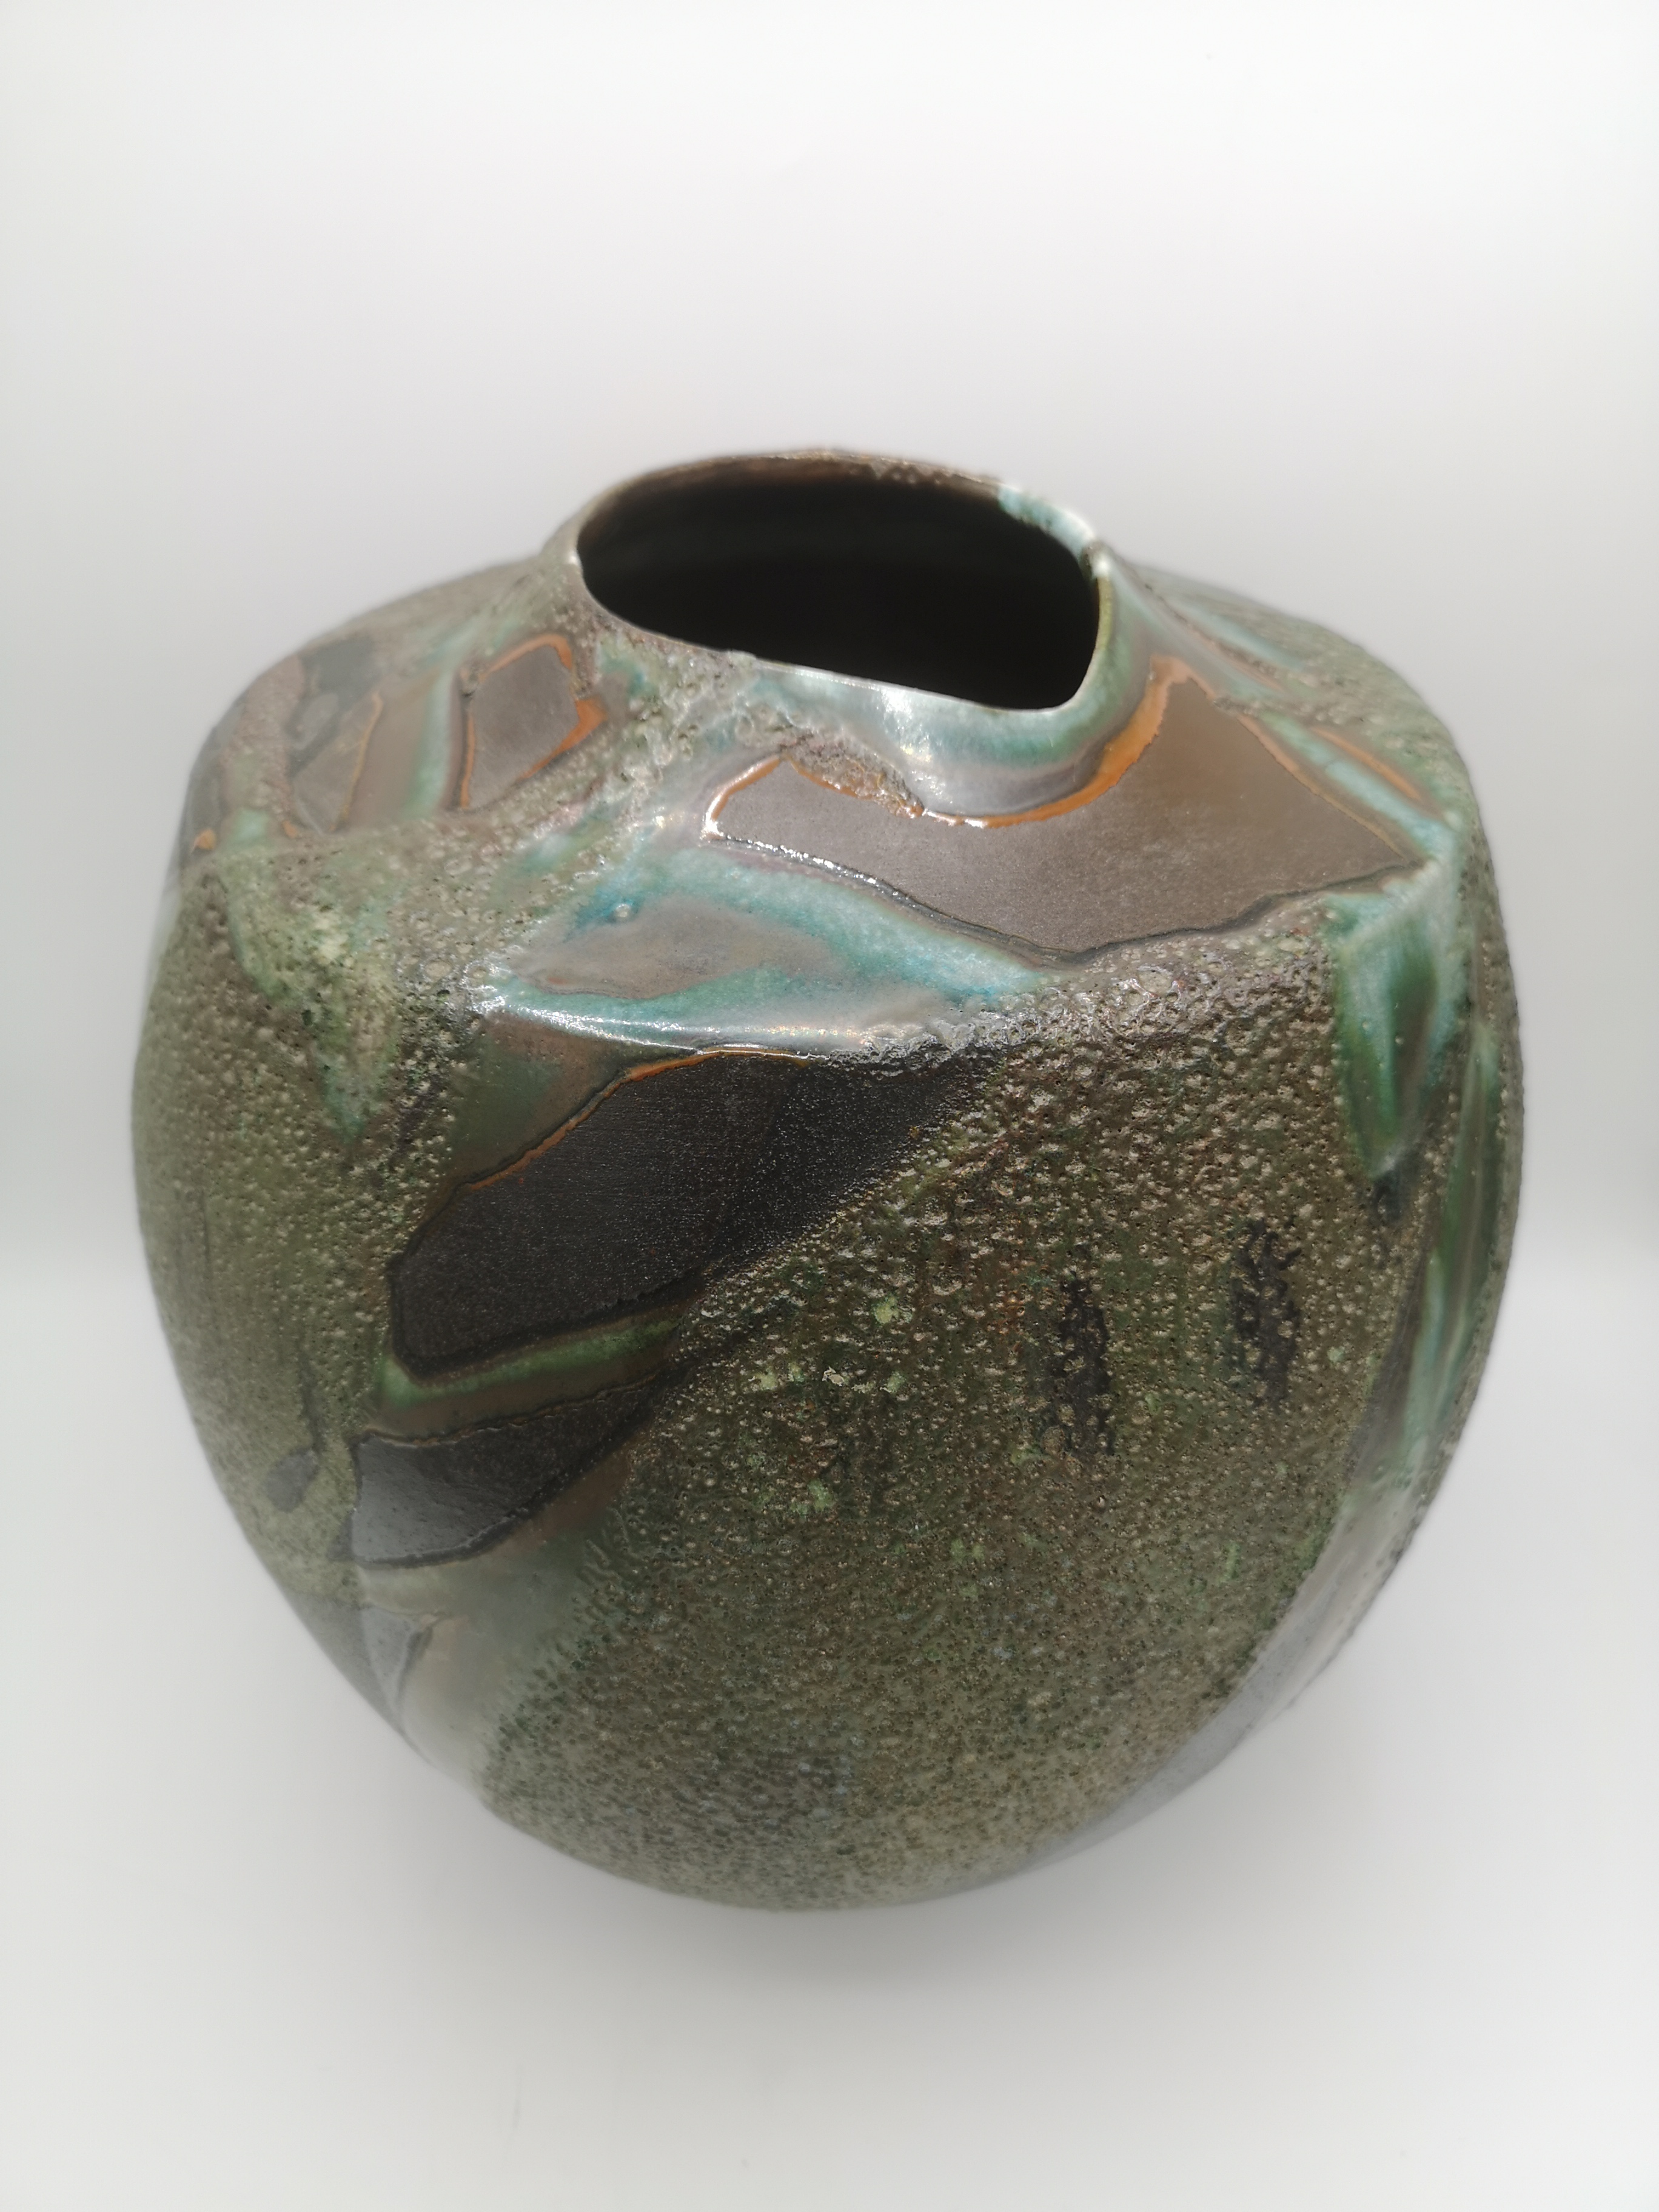 Ceramic raku vase by Tony Evans - Image 2 of 6